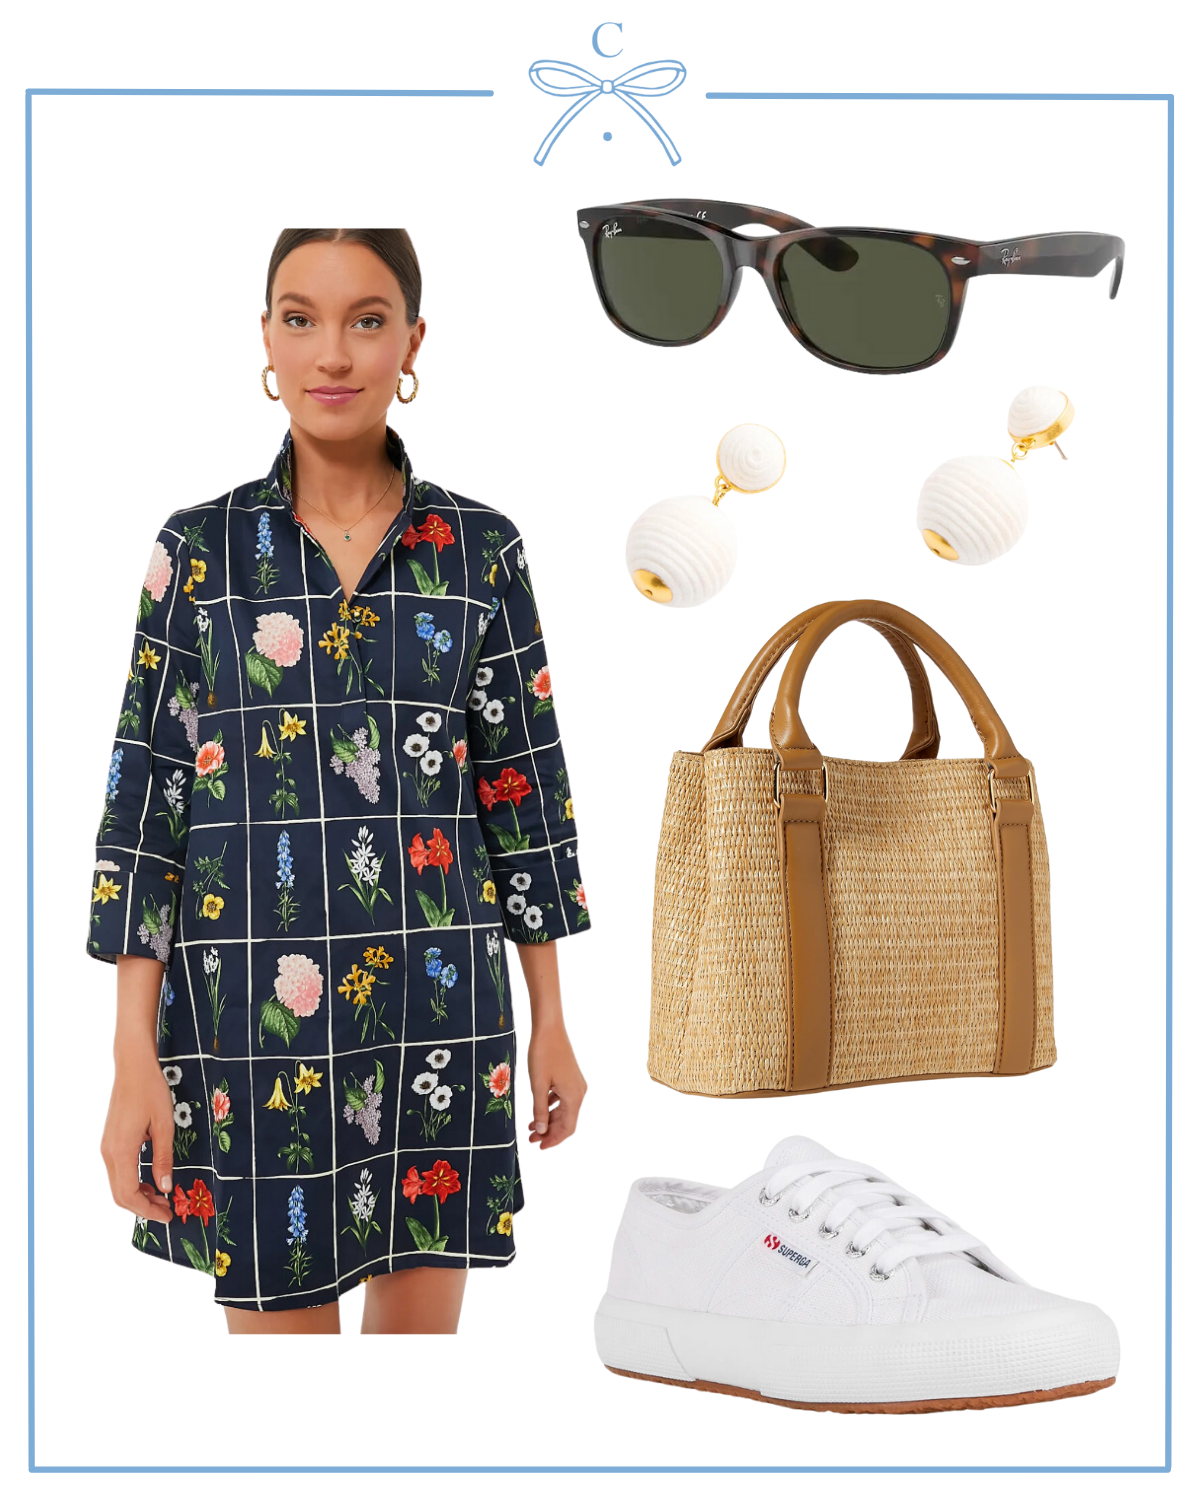 spring outfit ideas with tuckernuck navy fresh buds megan dress, ray-ban new wayfarer sunglasses, straw amazon bag, superga cotu sneakers, and tuckernuck petite lantern earrings